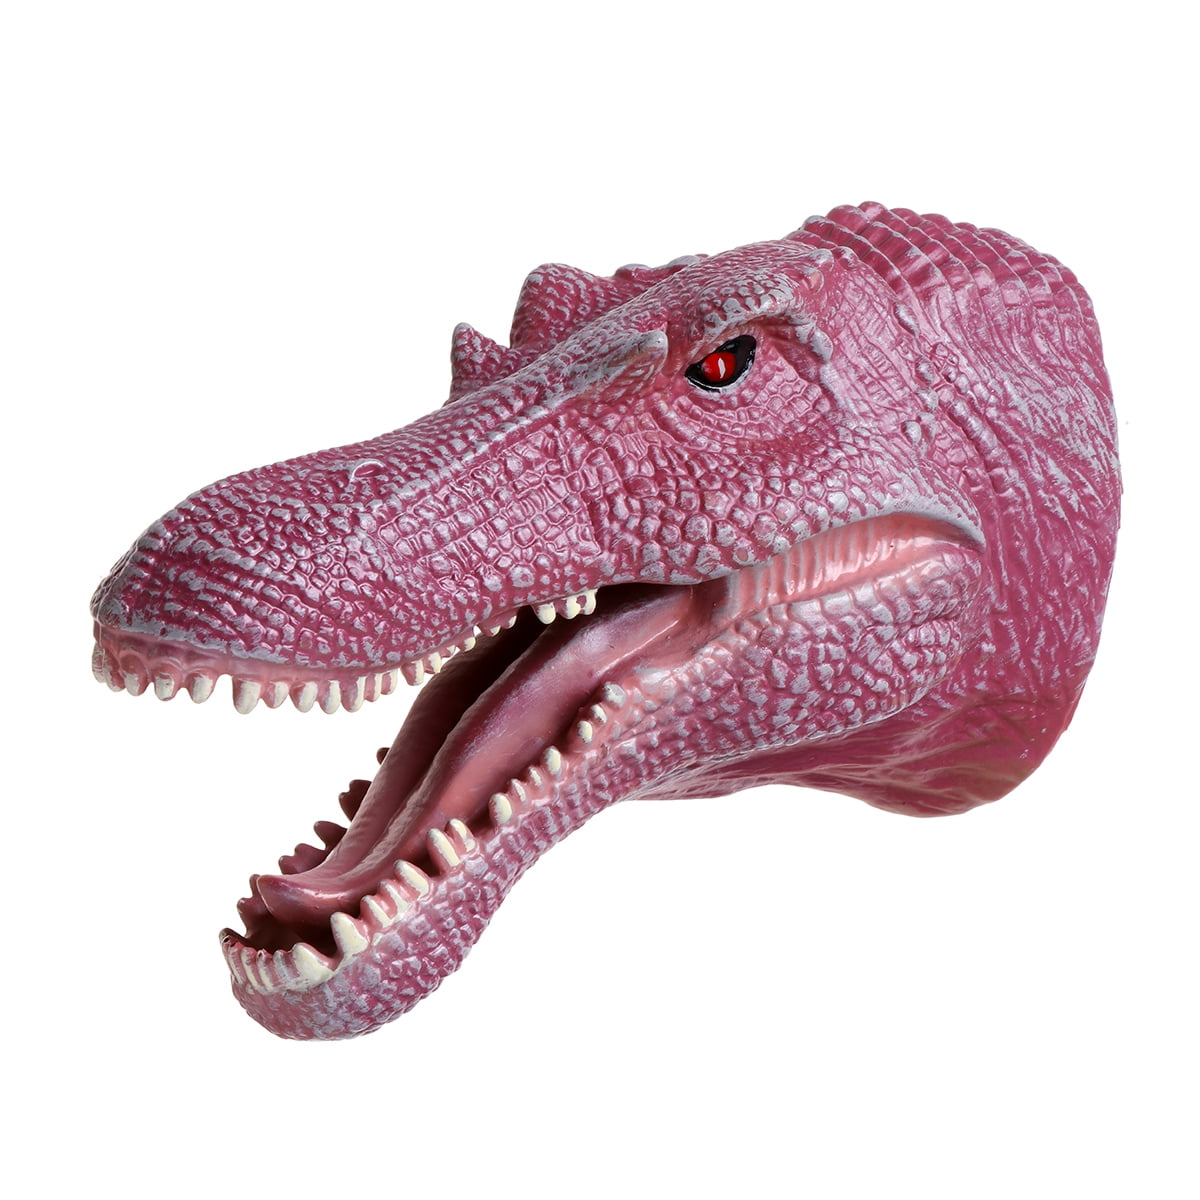 Dinosaur Hand Puppet Carnotaurus Dinosaur Realistic Soft Plastic Toy for Kids 